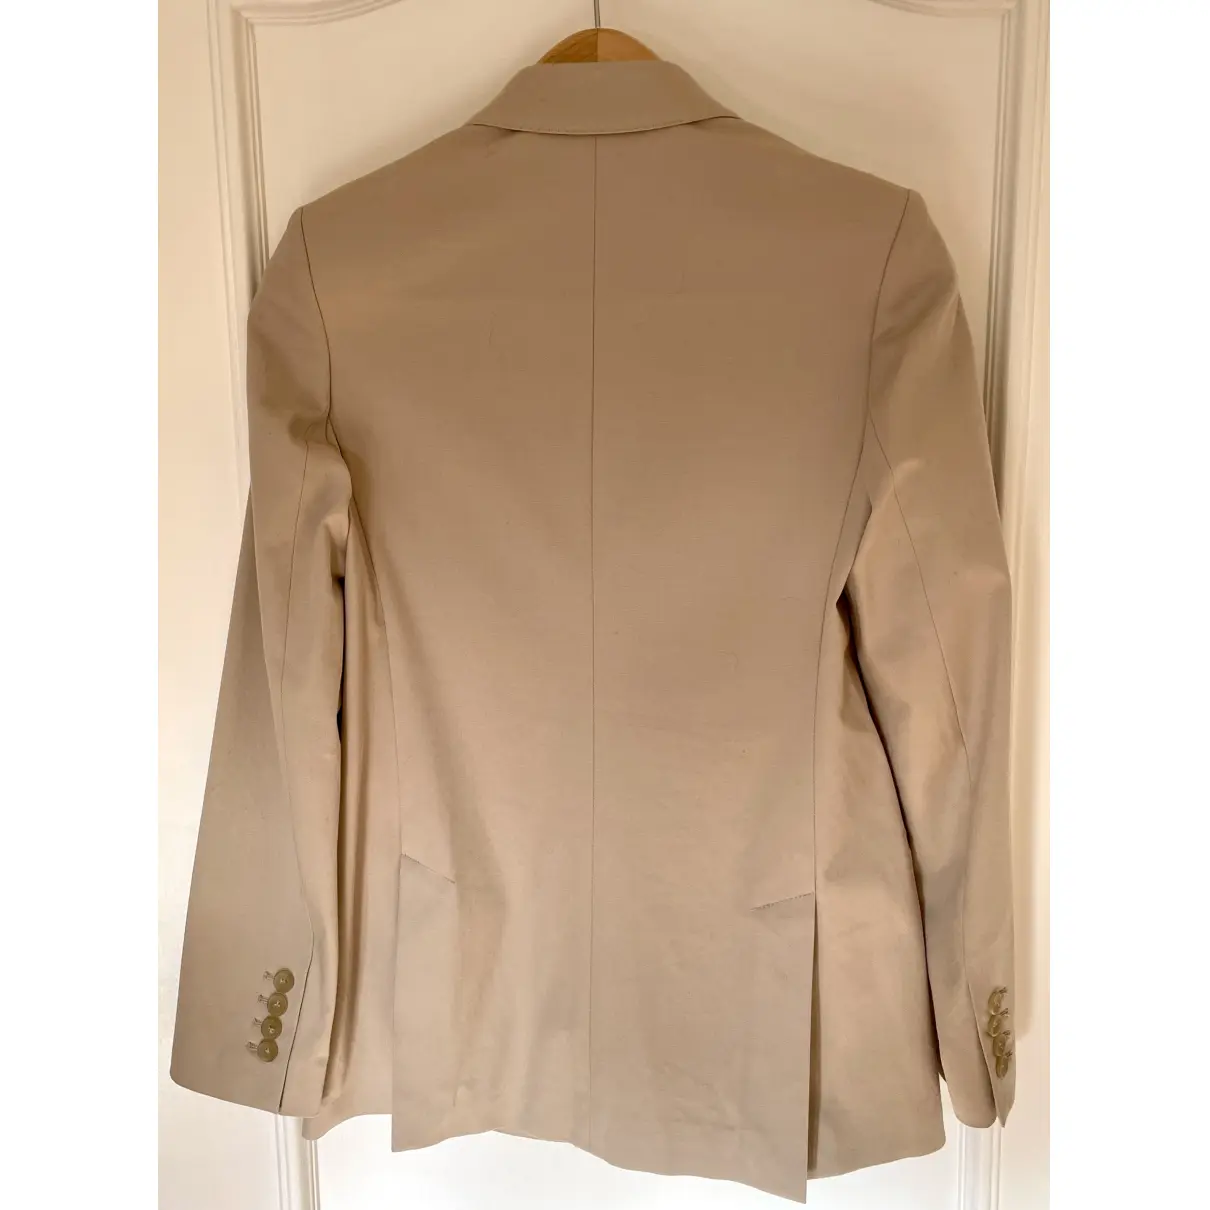 Buy Paul Smith Beige Cotton Jacket online